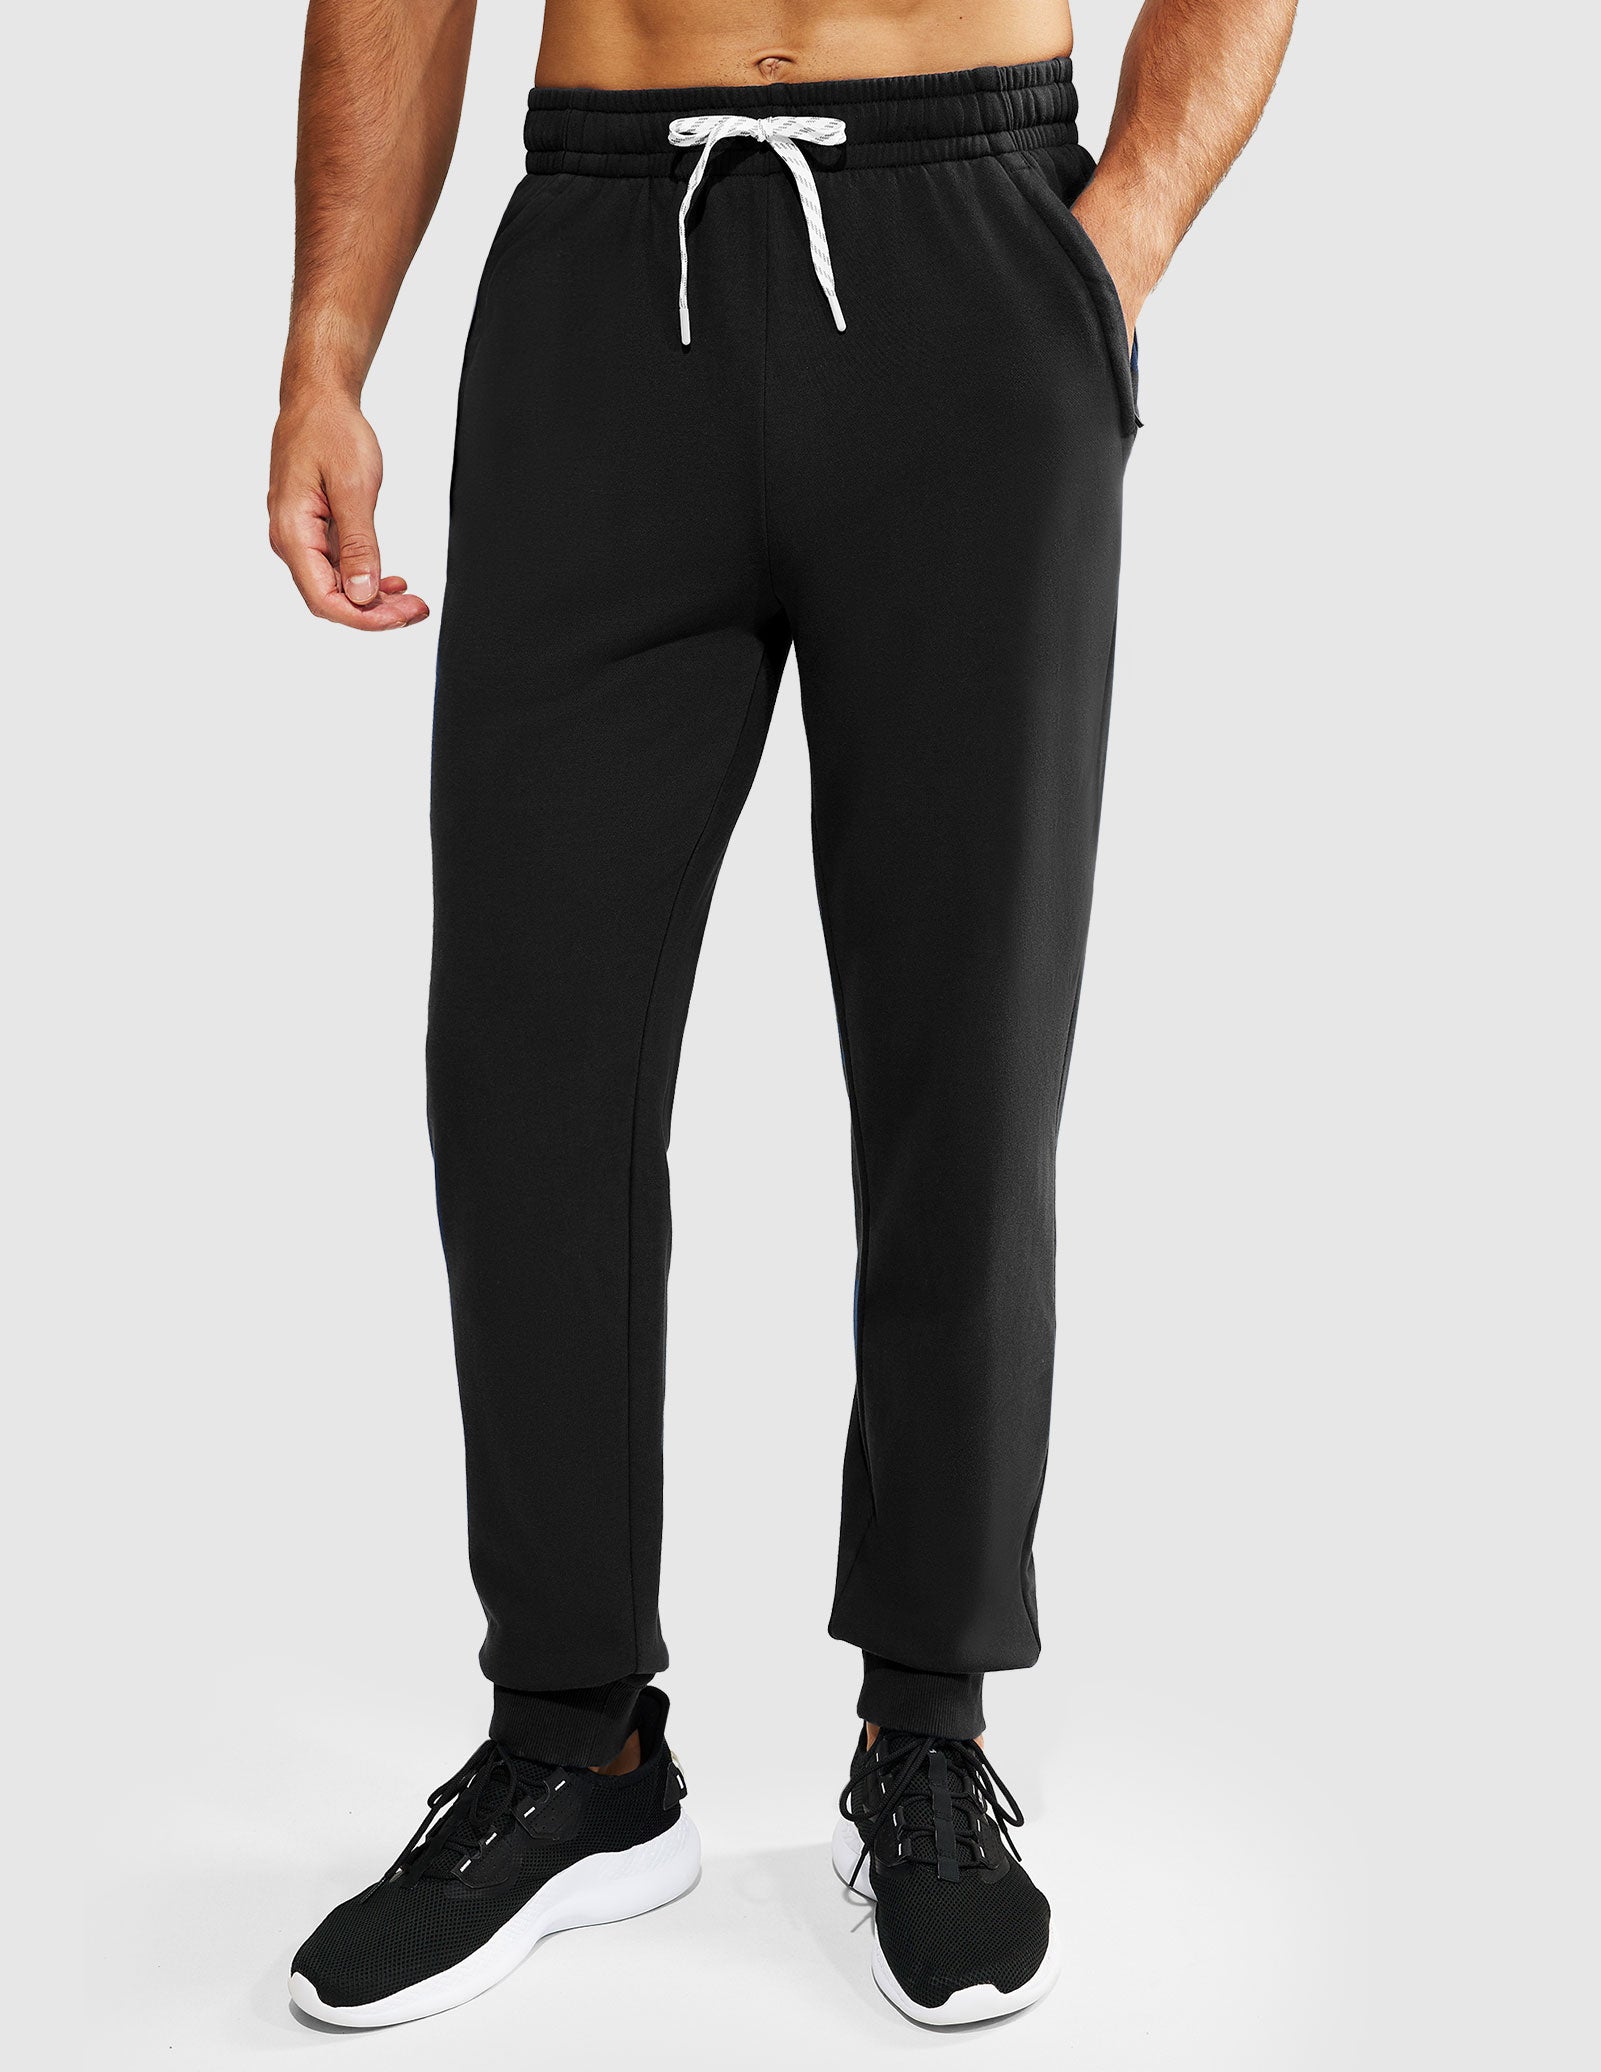 Men's Cotton Joggers Athletic Sweatpants with Pockets - Black / S